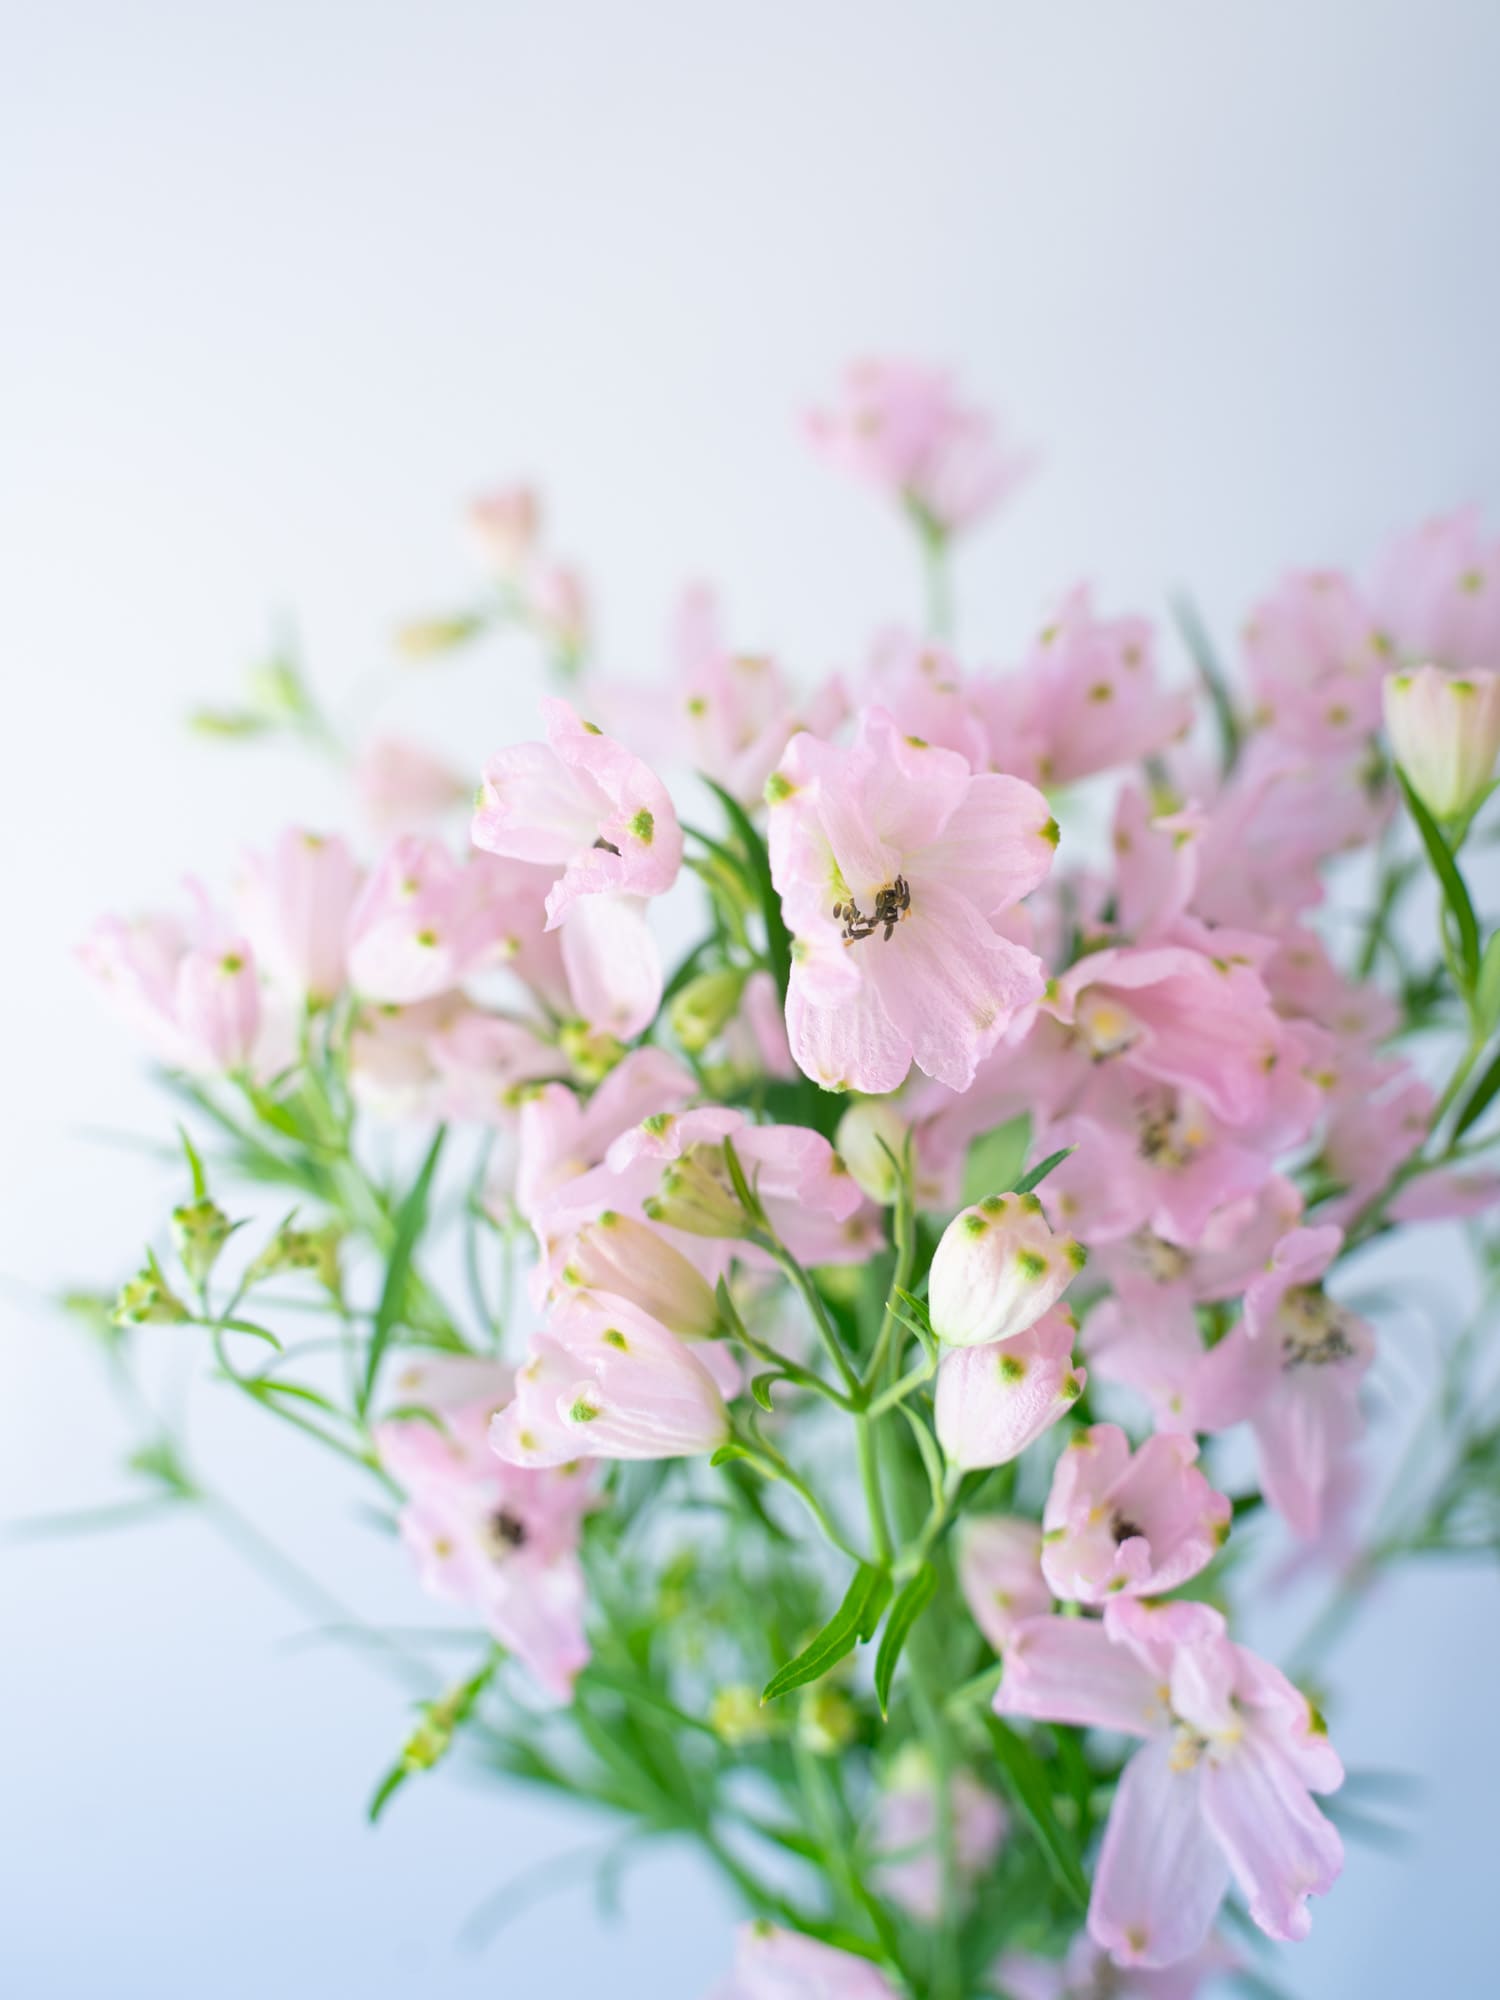 Weekend Flower - やわらかピンクのデルフィニウム -